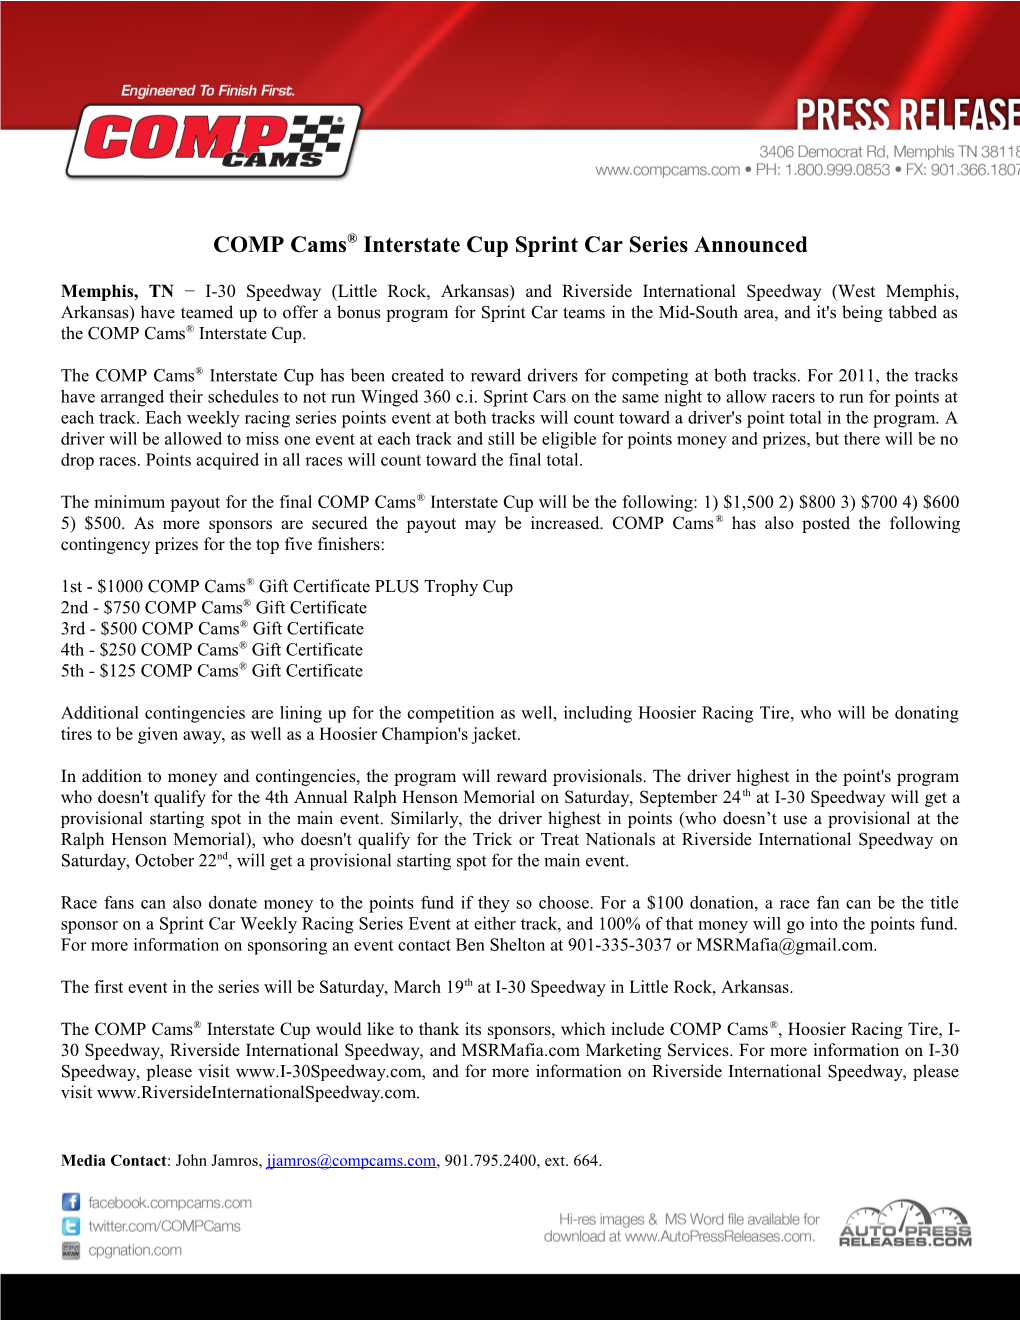 COMP Cams Interstate Cup Sprint Car Series Announced